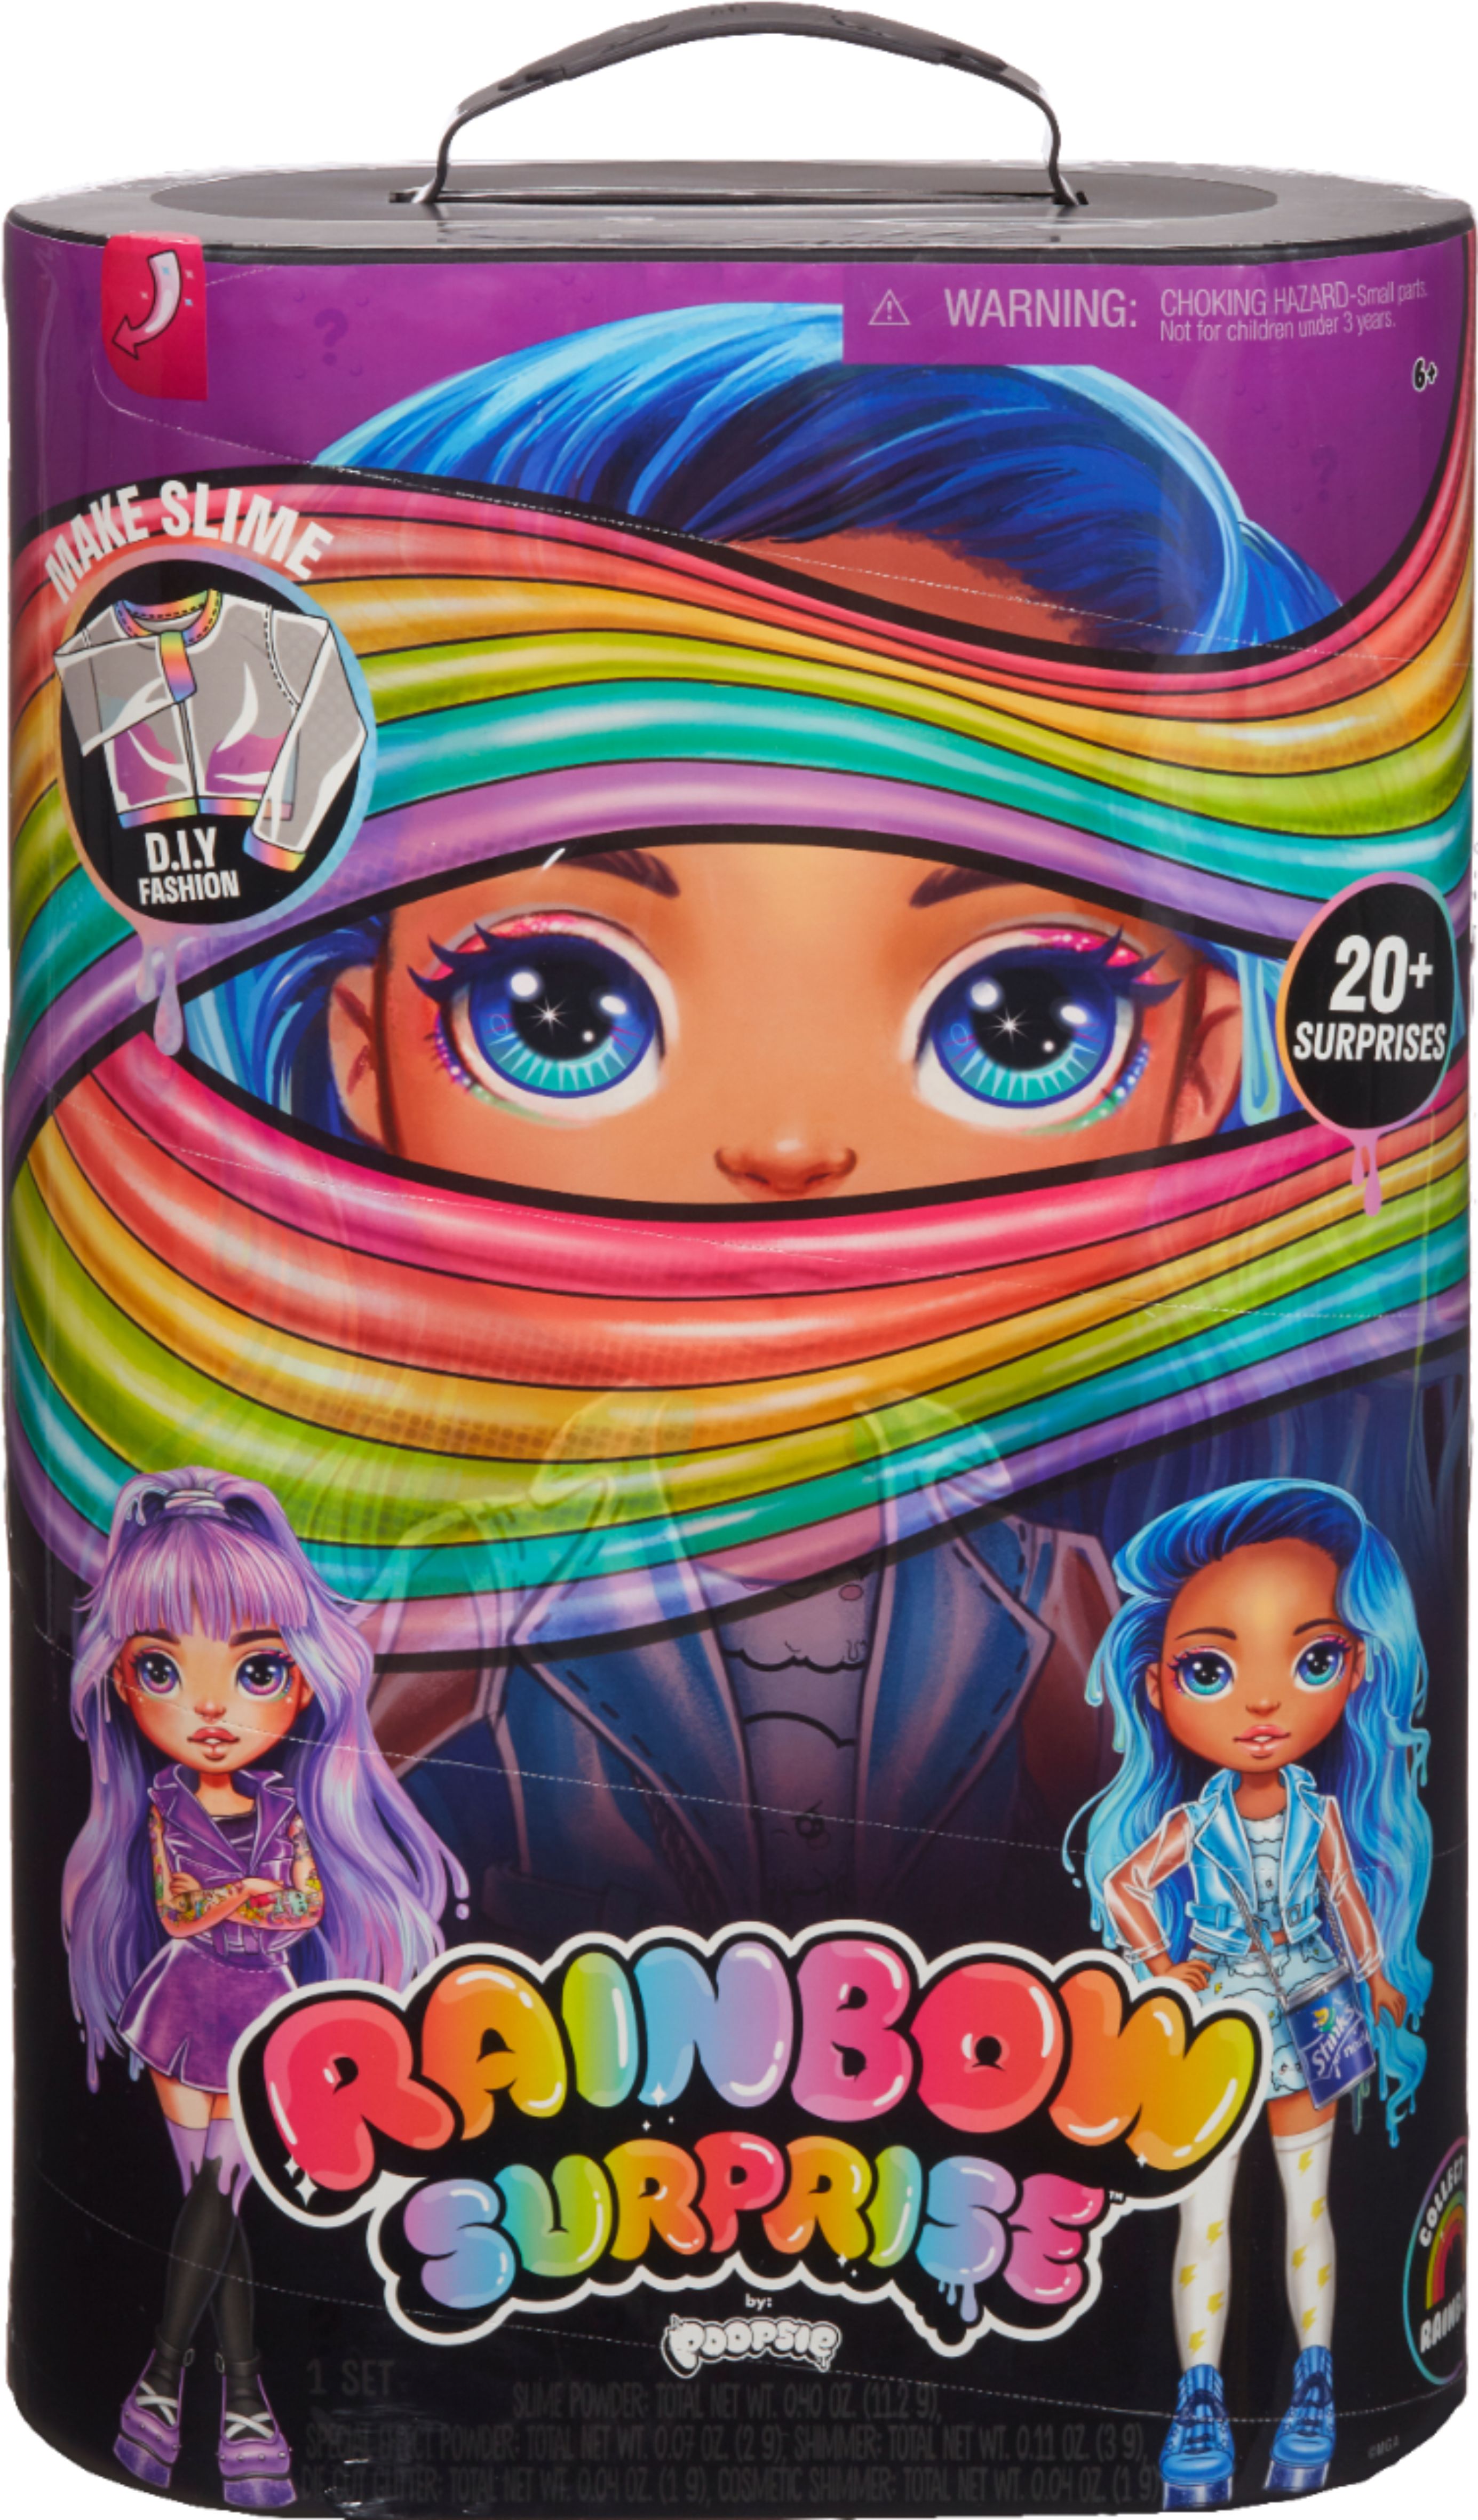 14" Rainbow Surprise Dolls by Poopsie Brand New Sealed. Price